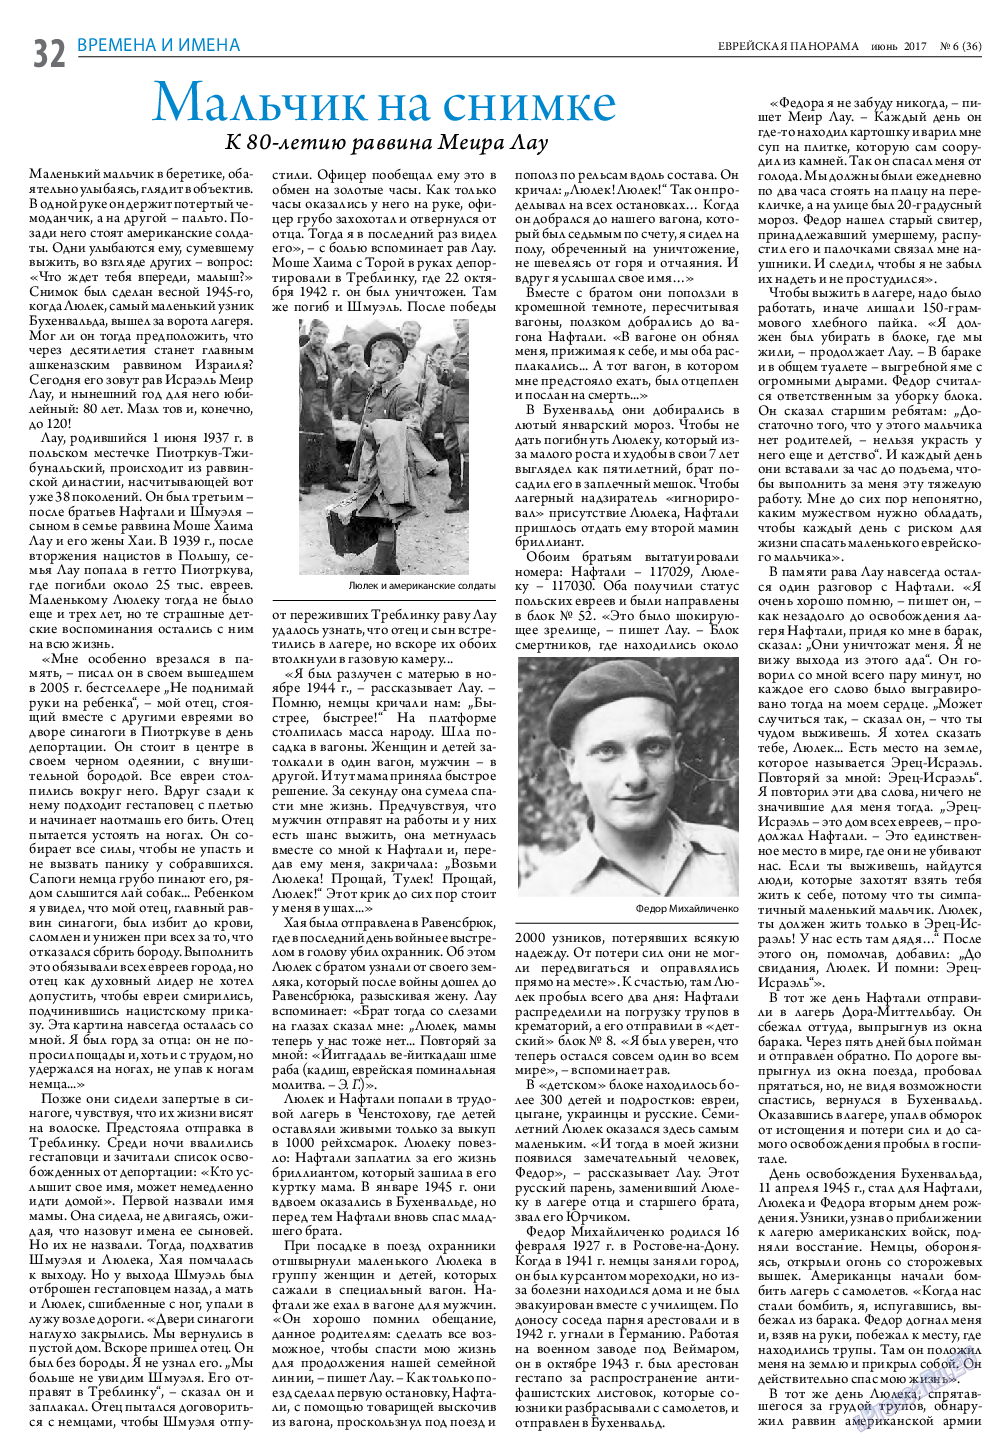 Еврейская панорама, газета. 2017 №6 стр.32